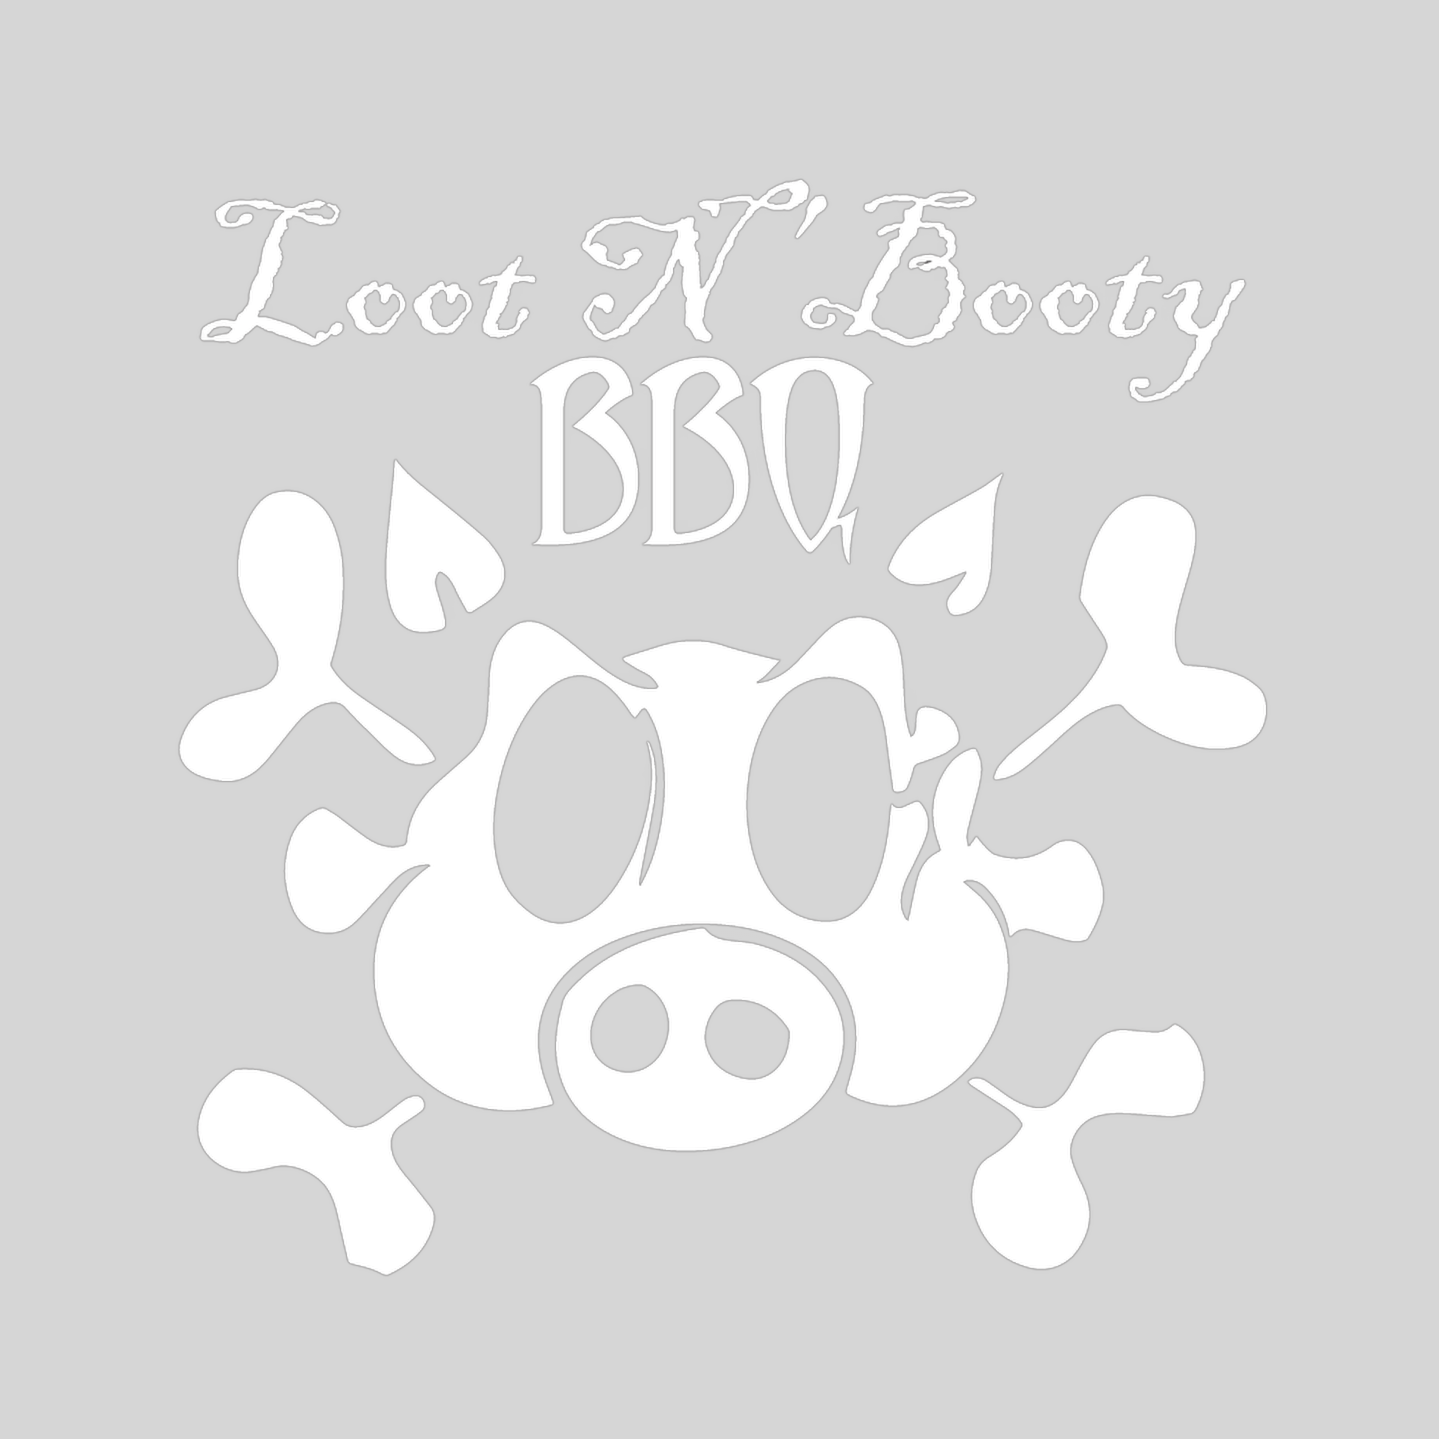 Loot’n’Booty BBQ